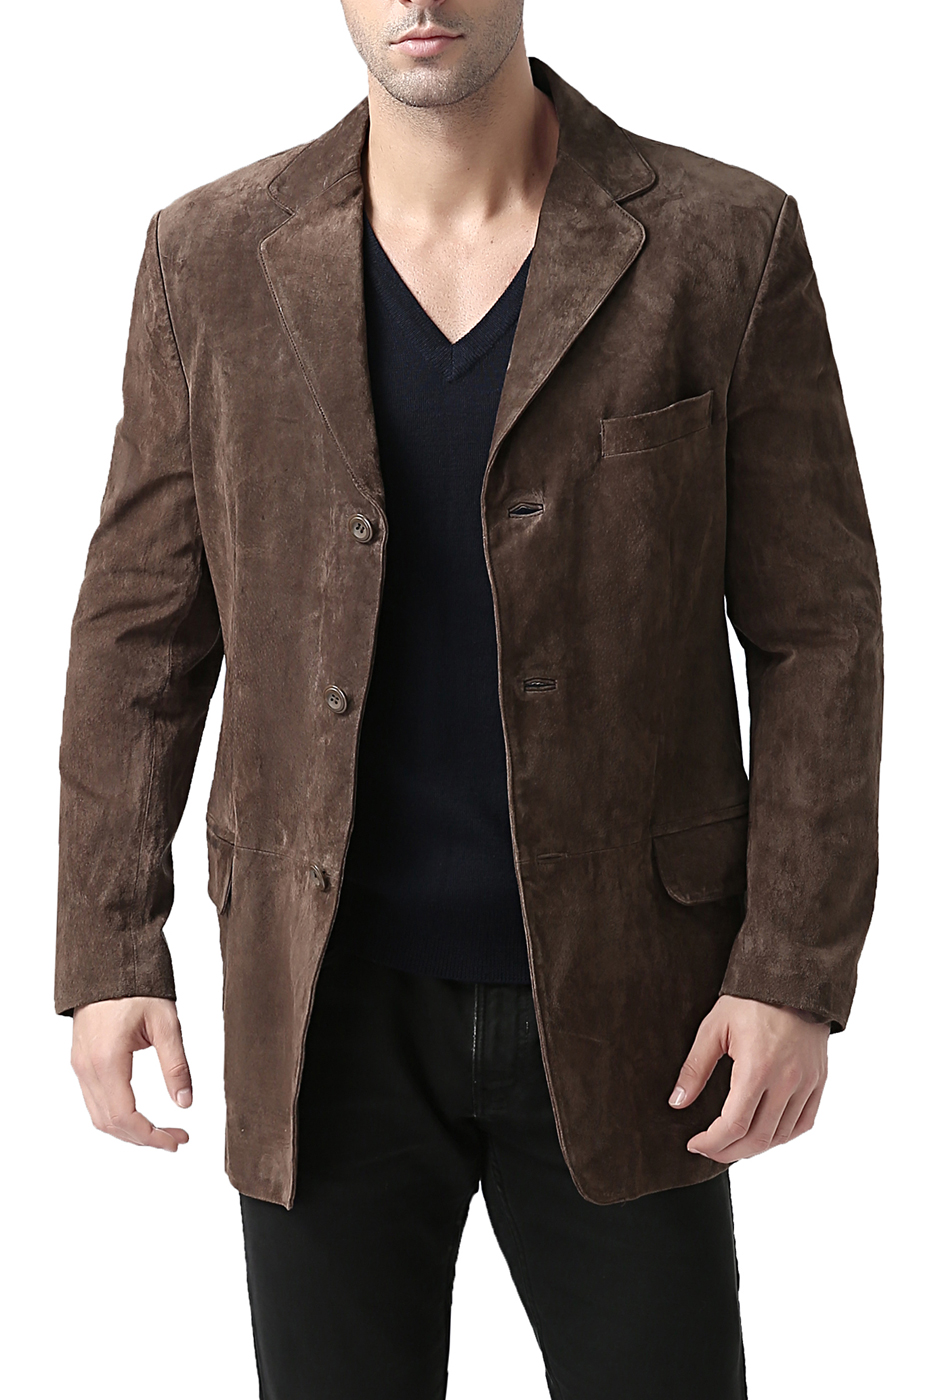 BGSD Men's Robert 3-Button Leather Blazer Suede Sport Coat Jacket - Short